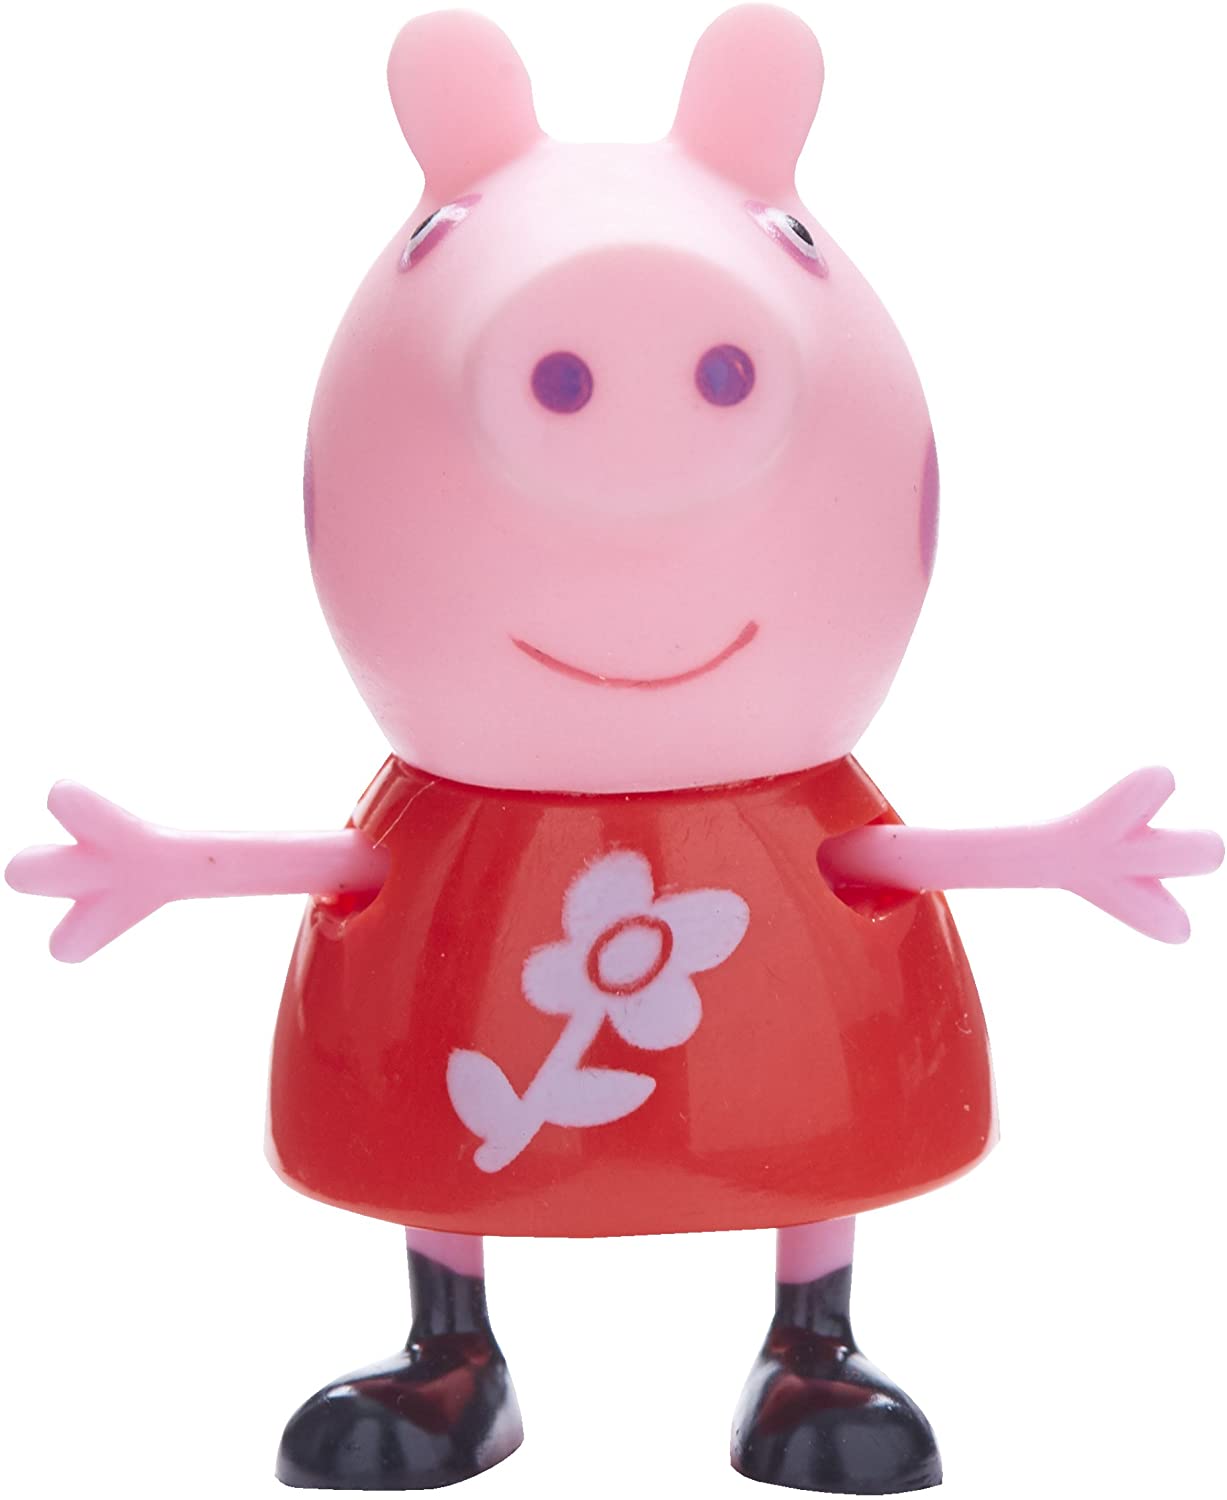 Peppa Pig - Family Figure Pack